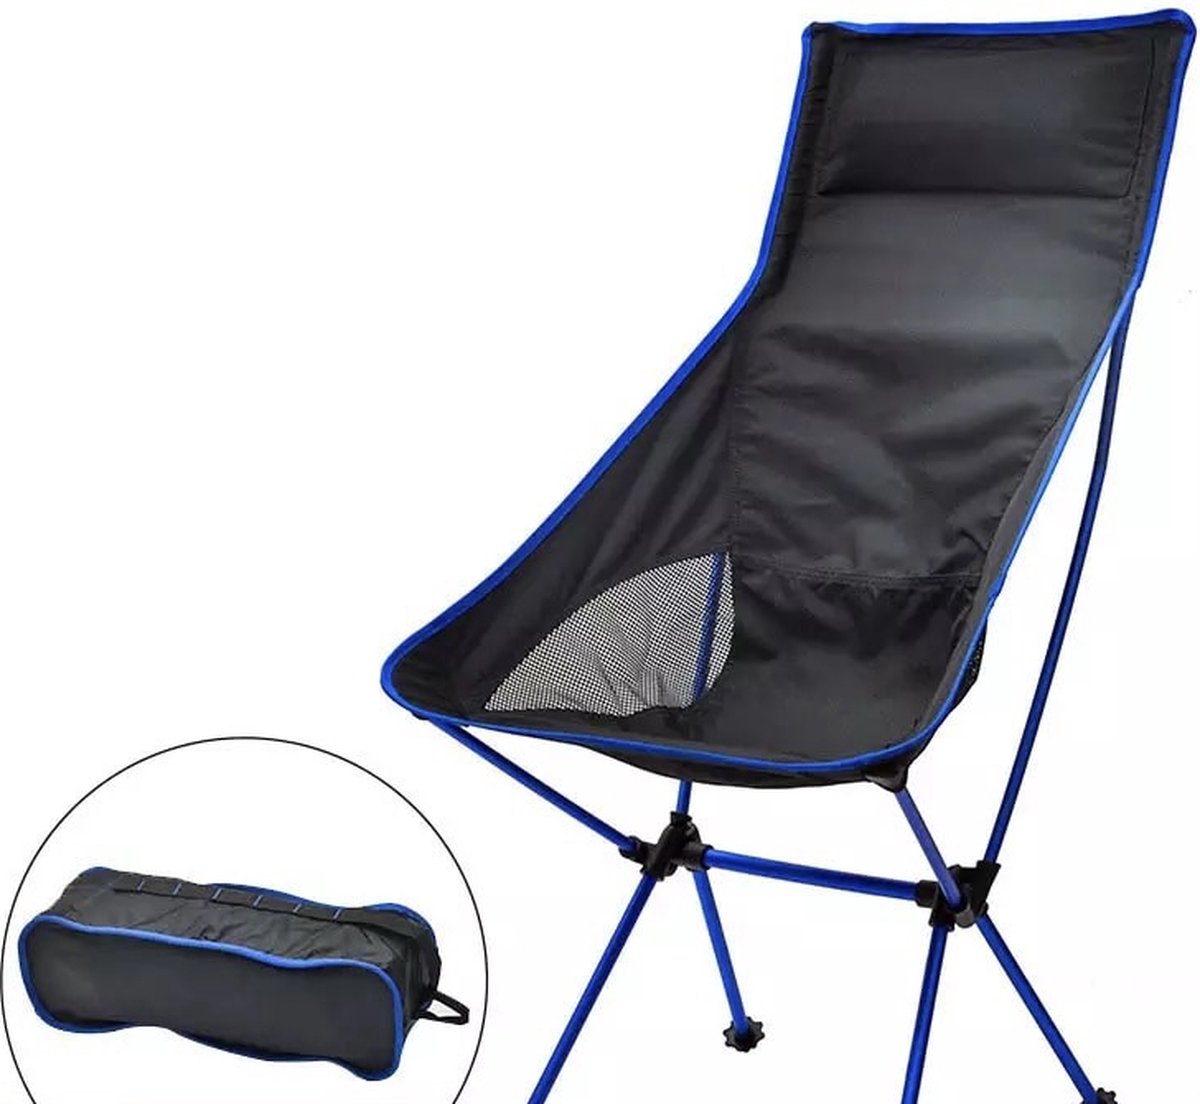 Strandstoel opvouwbaar met hoofdkussen - Kampeer vouwstoel - Karper/viskruk - Plooistoel - Ultralicht picknick meubel – Rood